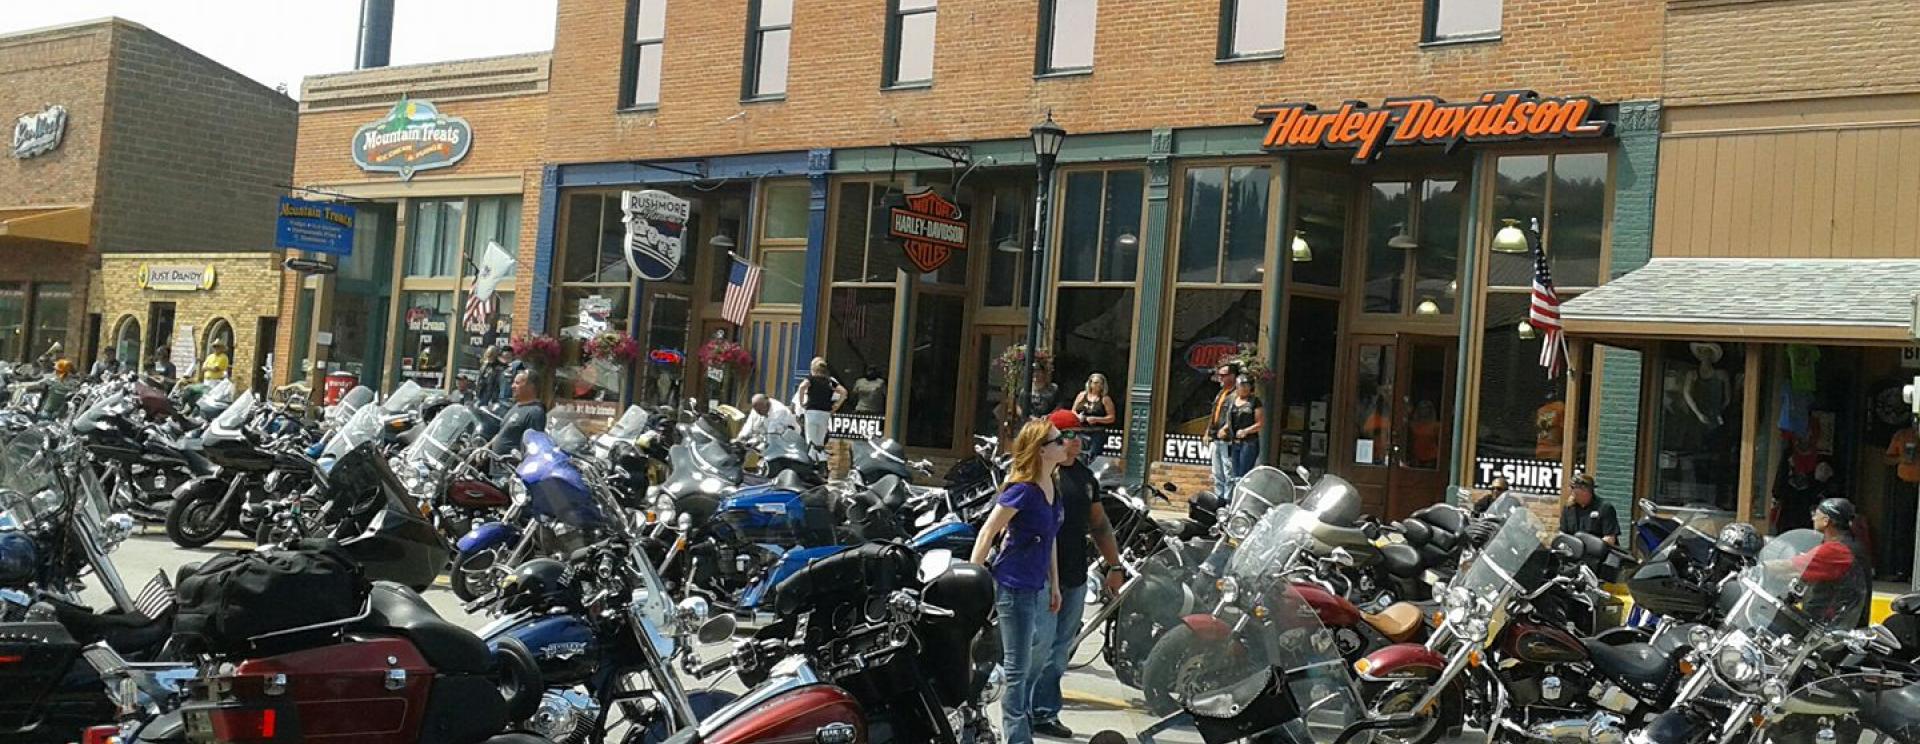 Hill City Harley-Davidson ®